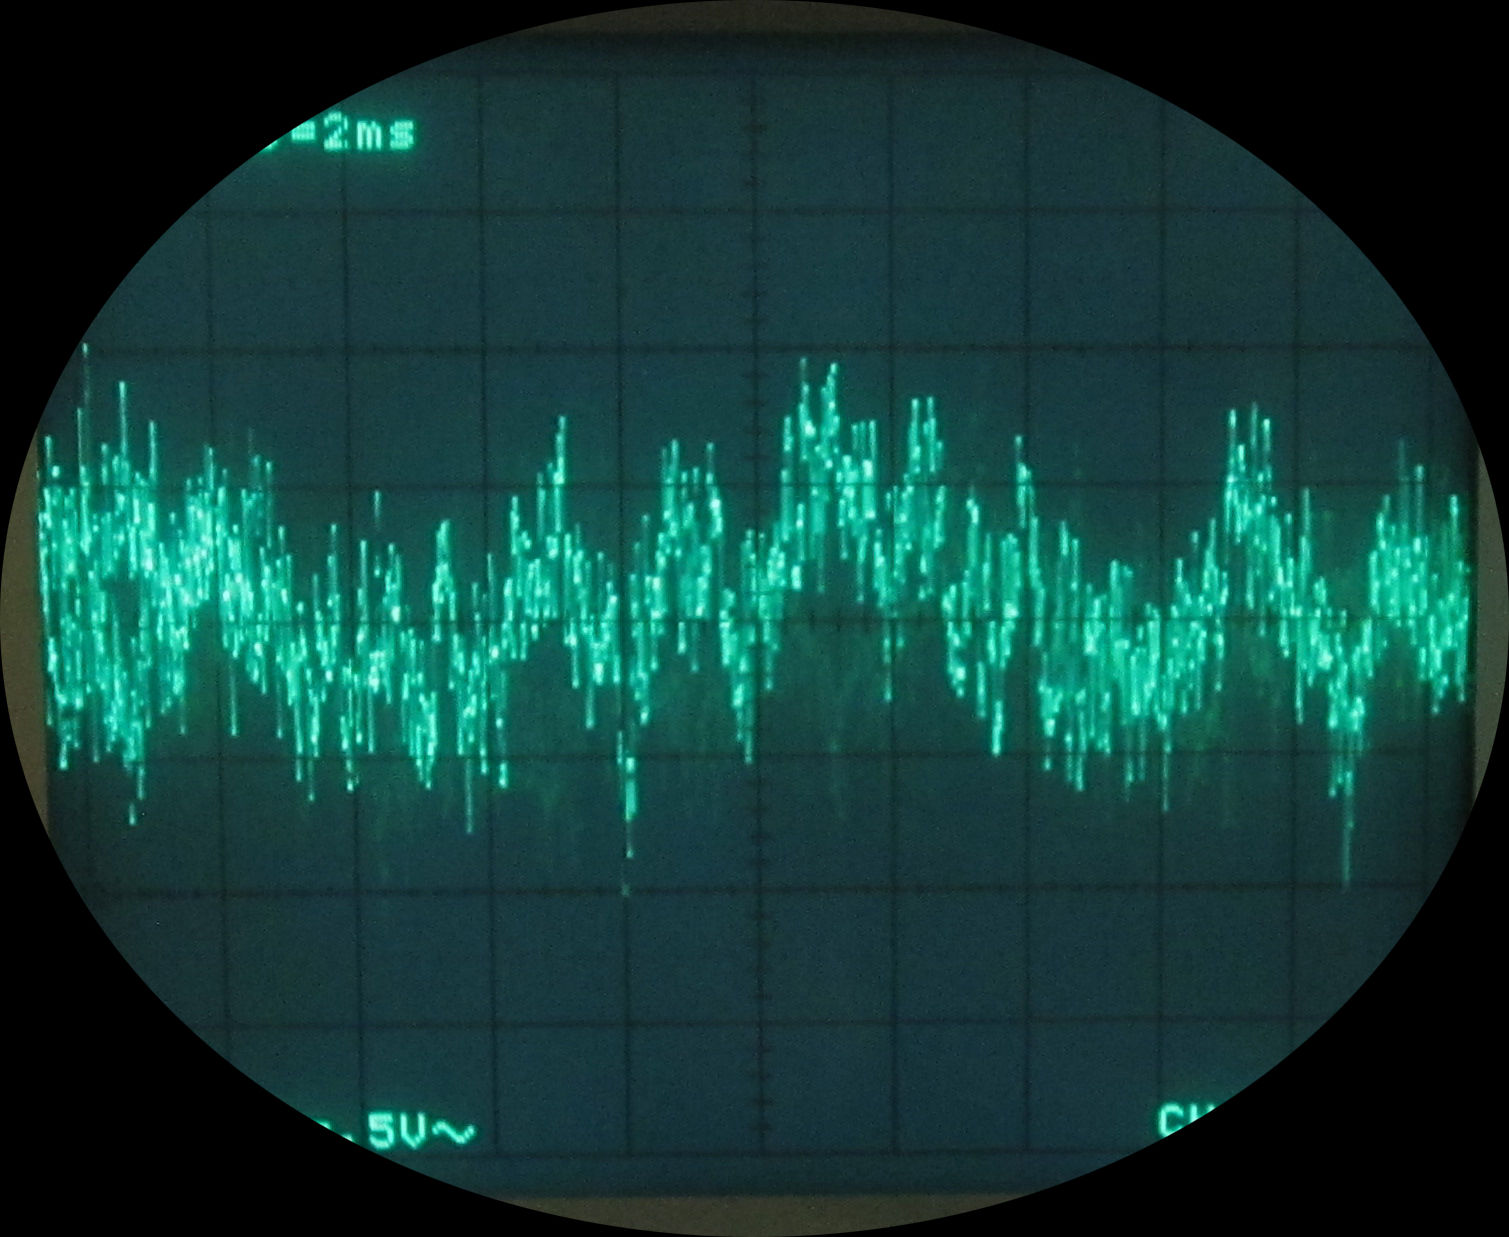 Spectrum Analysis of Brown Noise